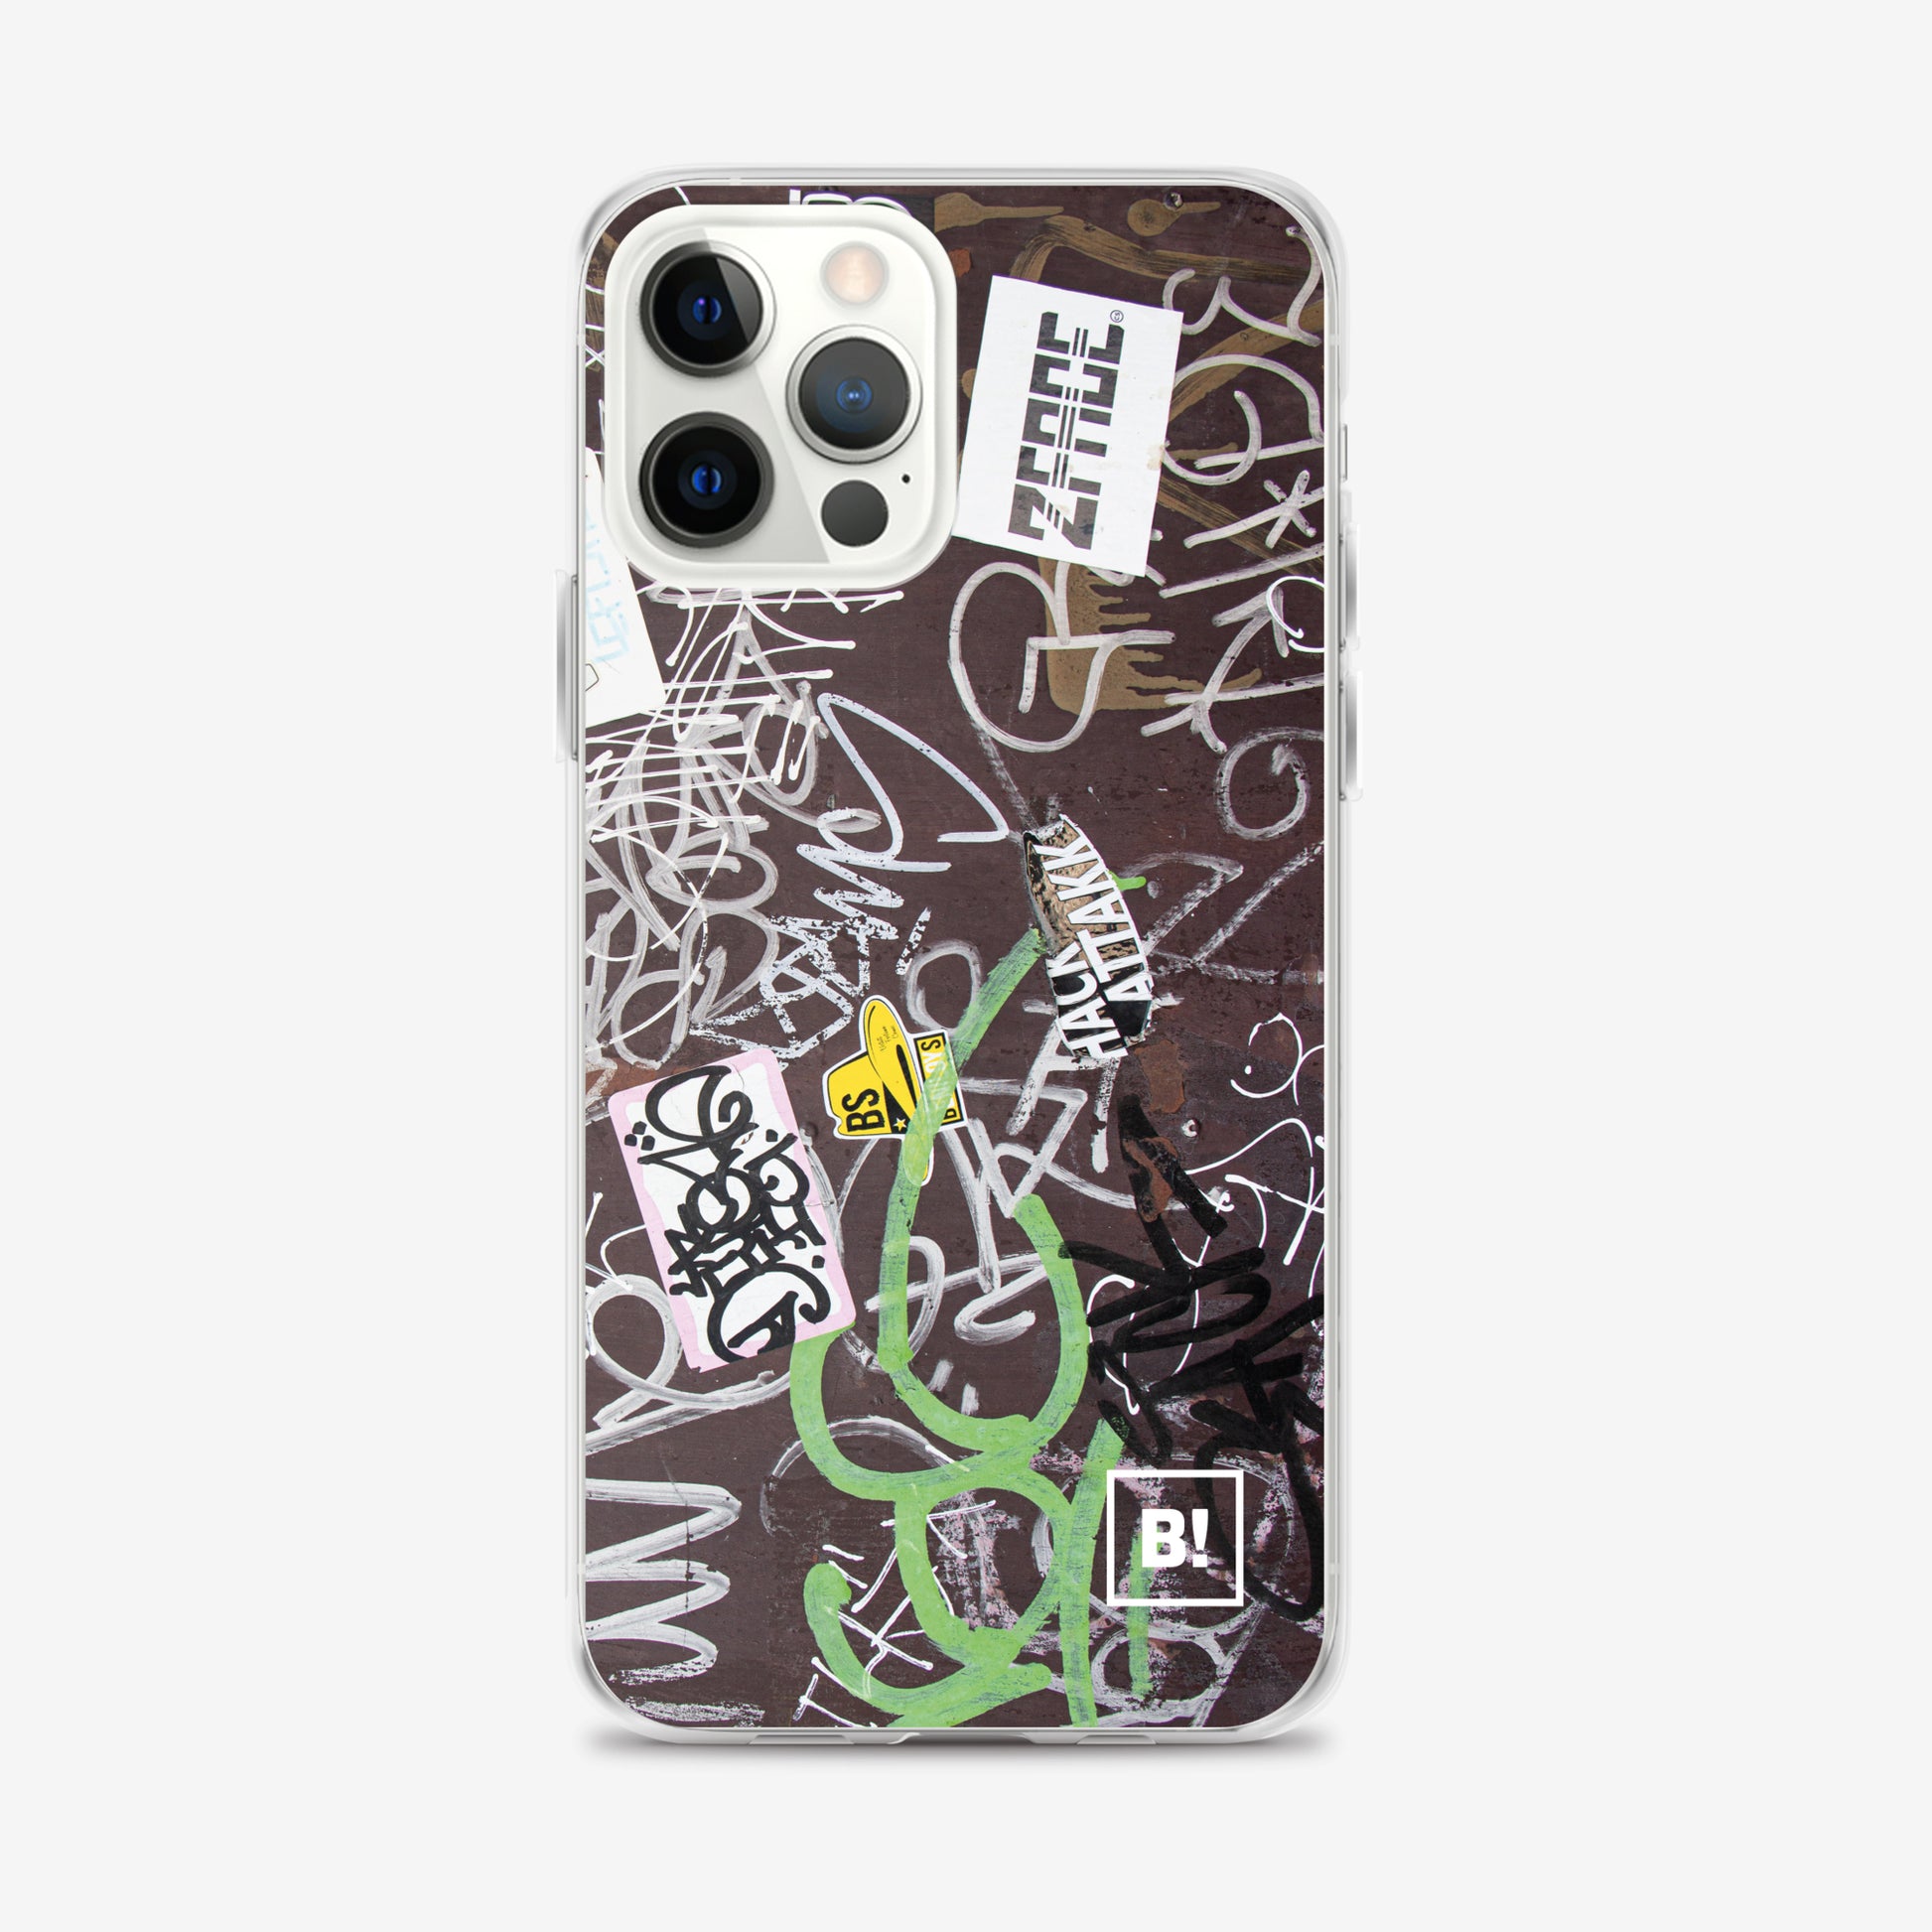 Binspired Hack Attakk No2 Urban Art iPhone 12 Pro Max Case